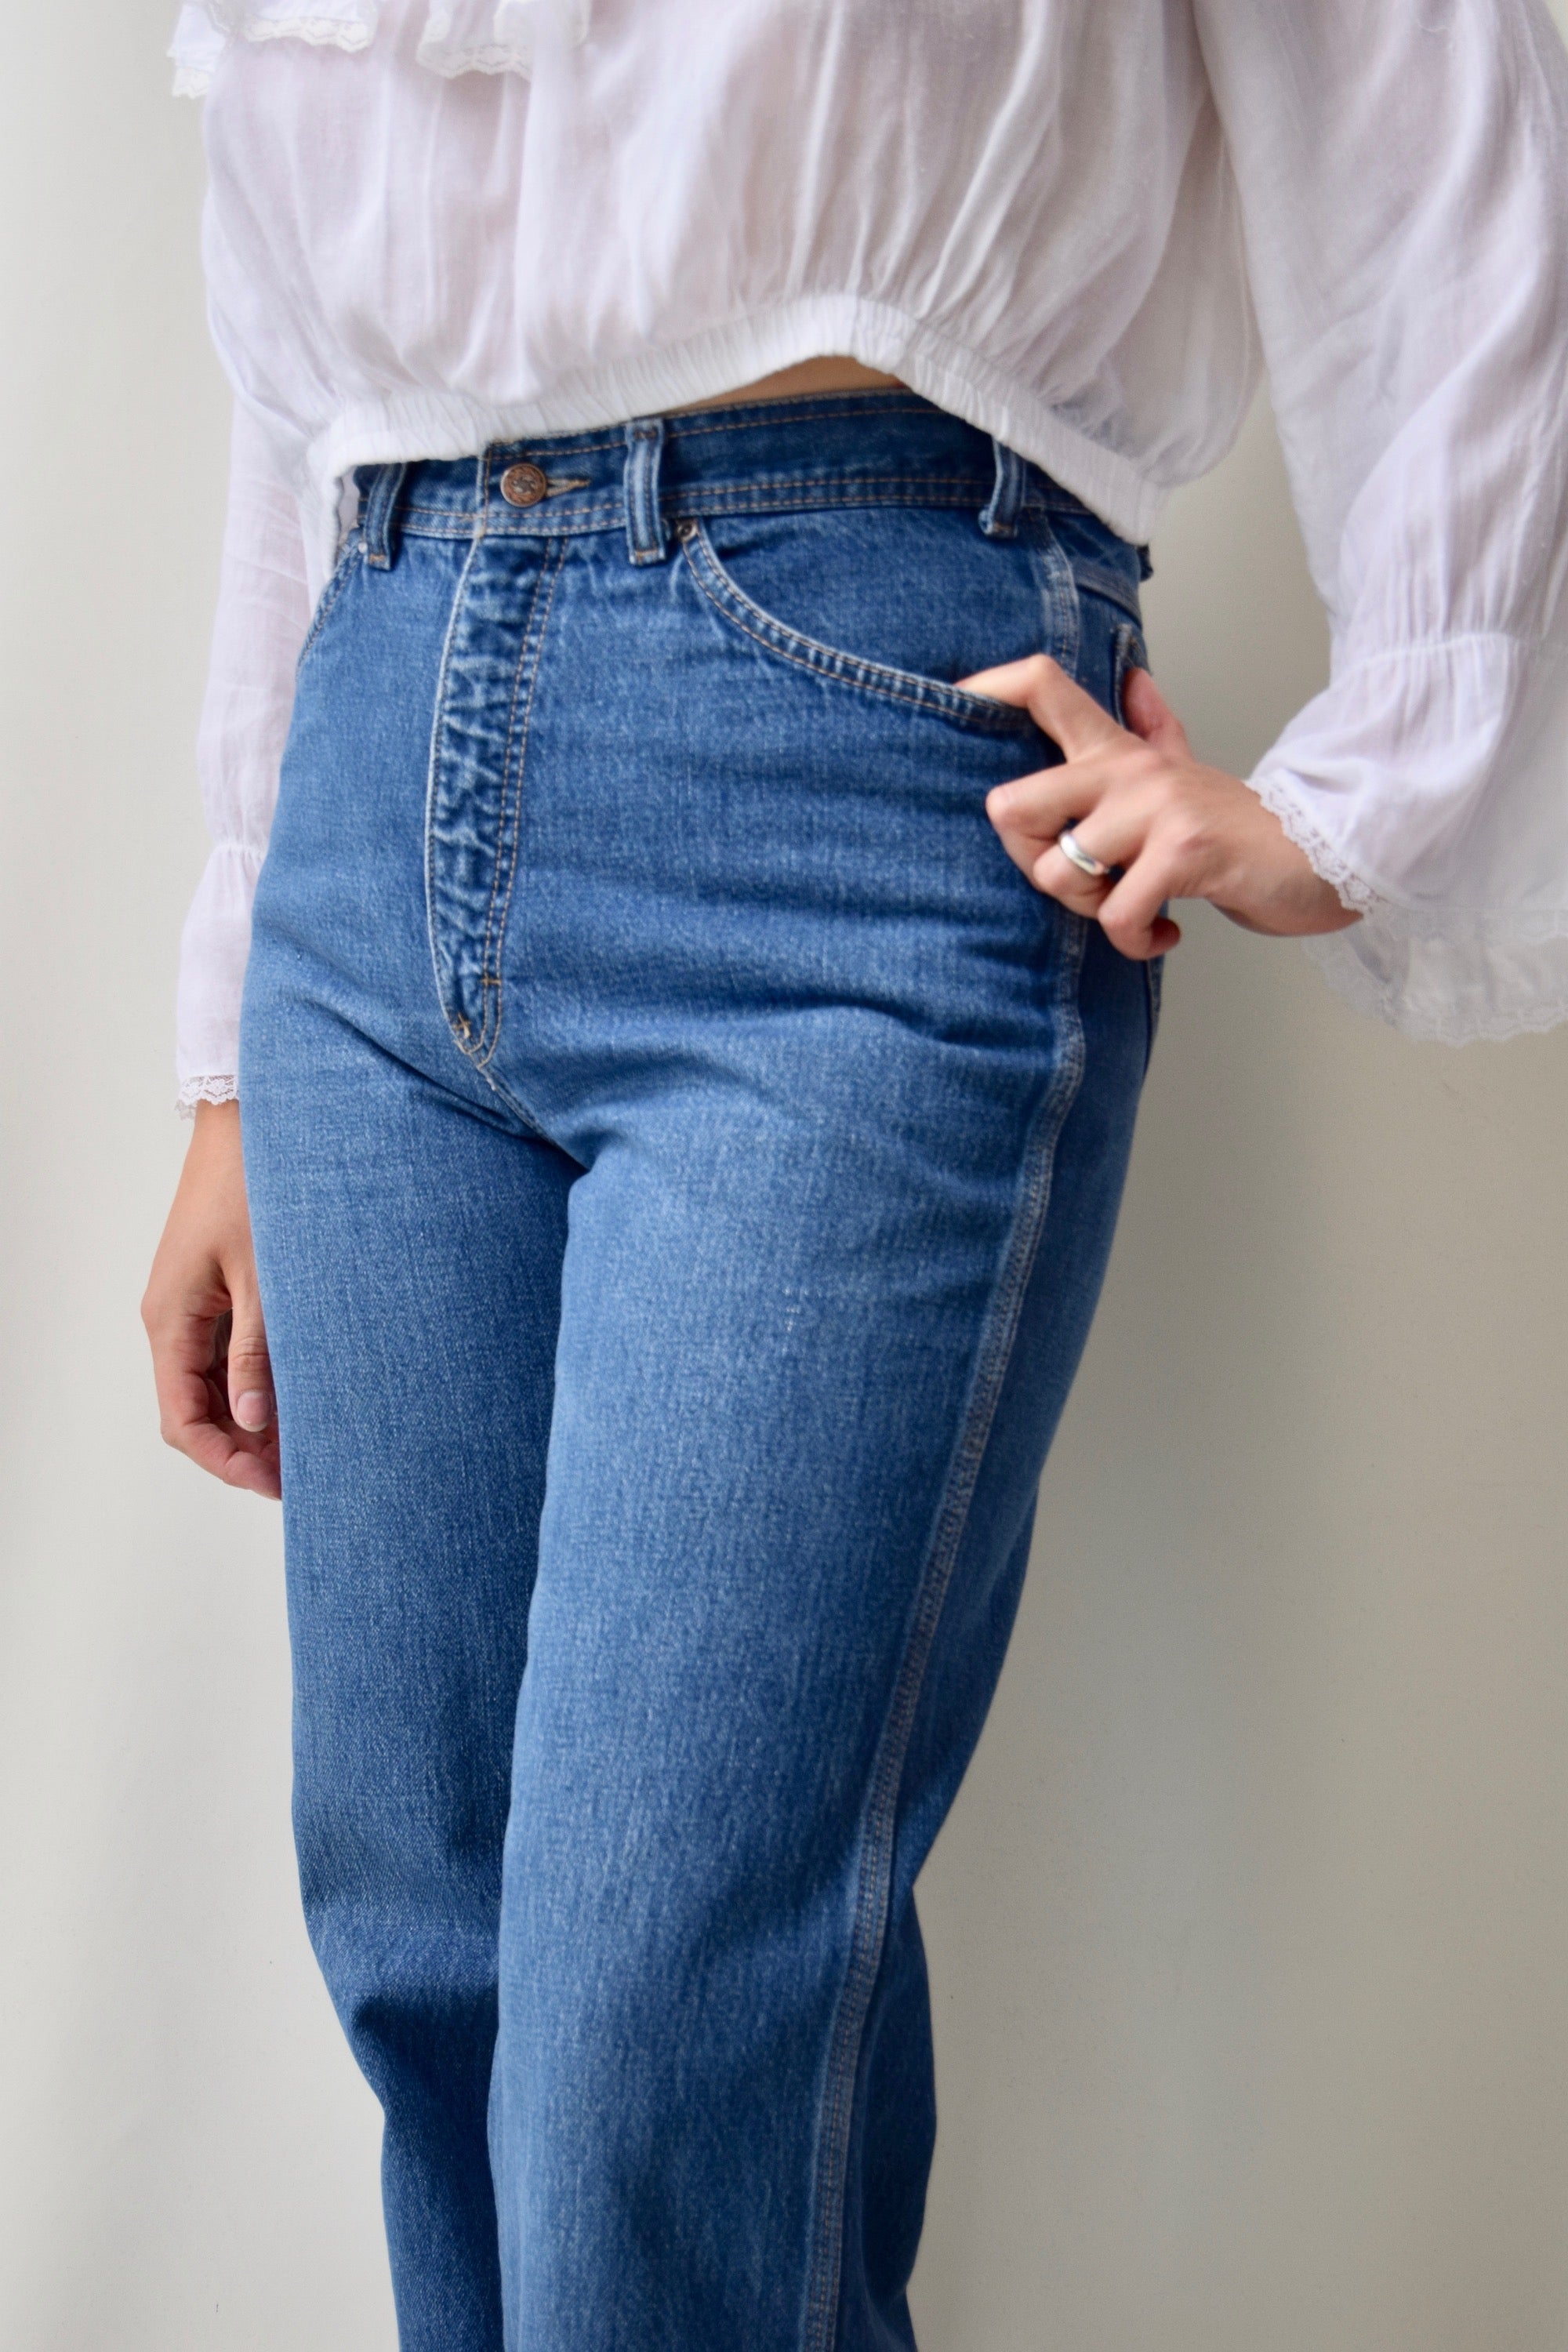 1970's "Bottom Half" Jeans